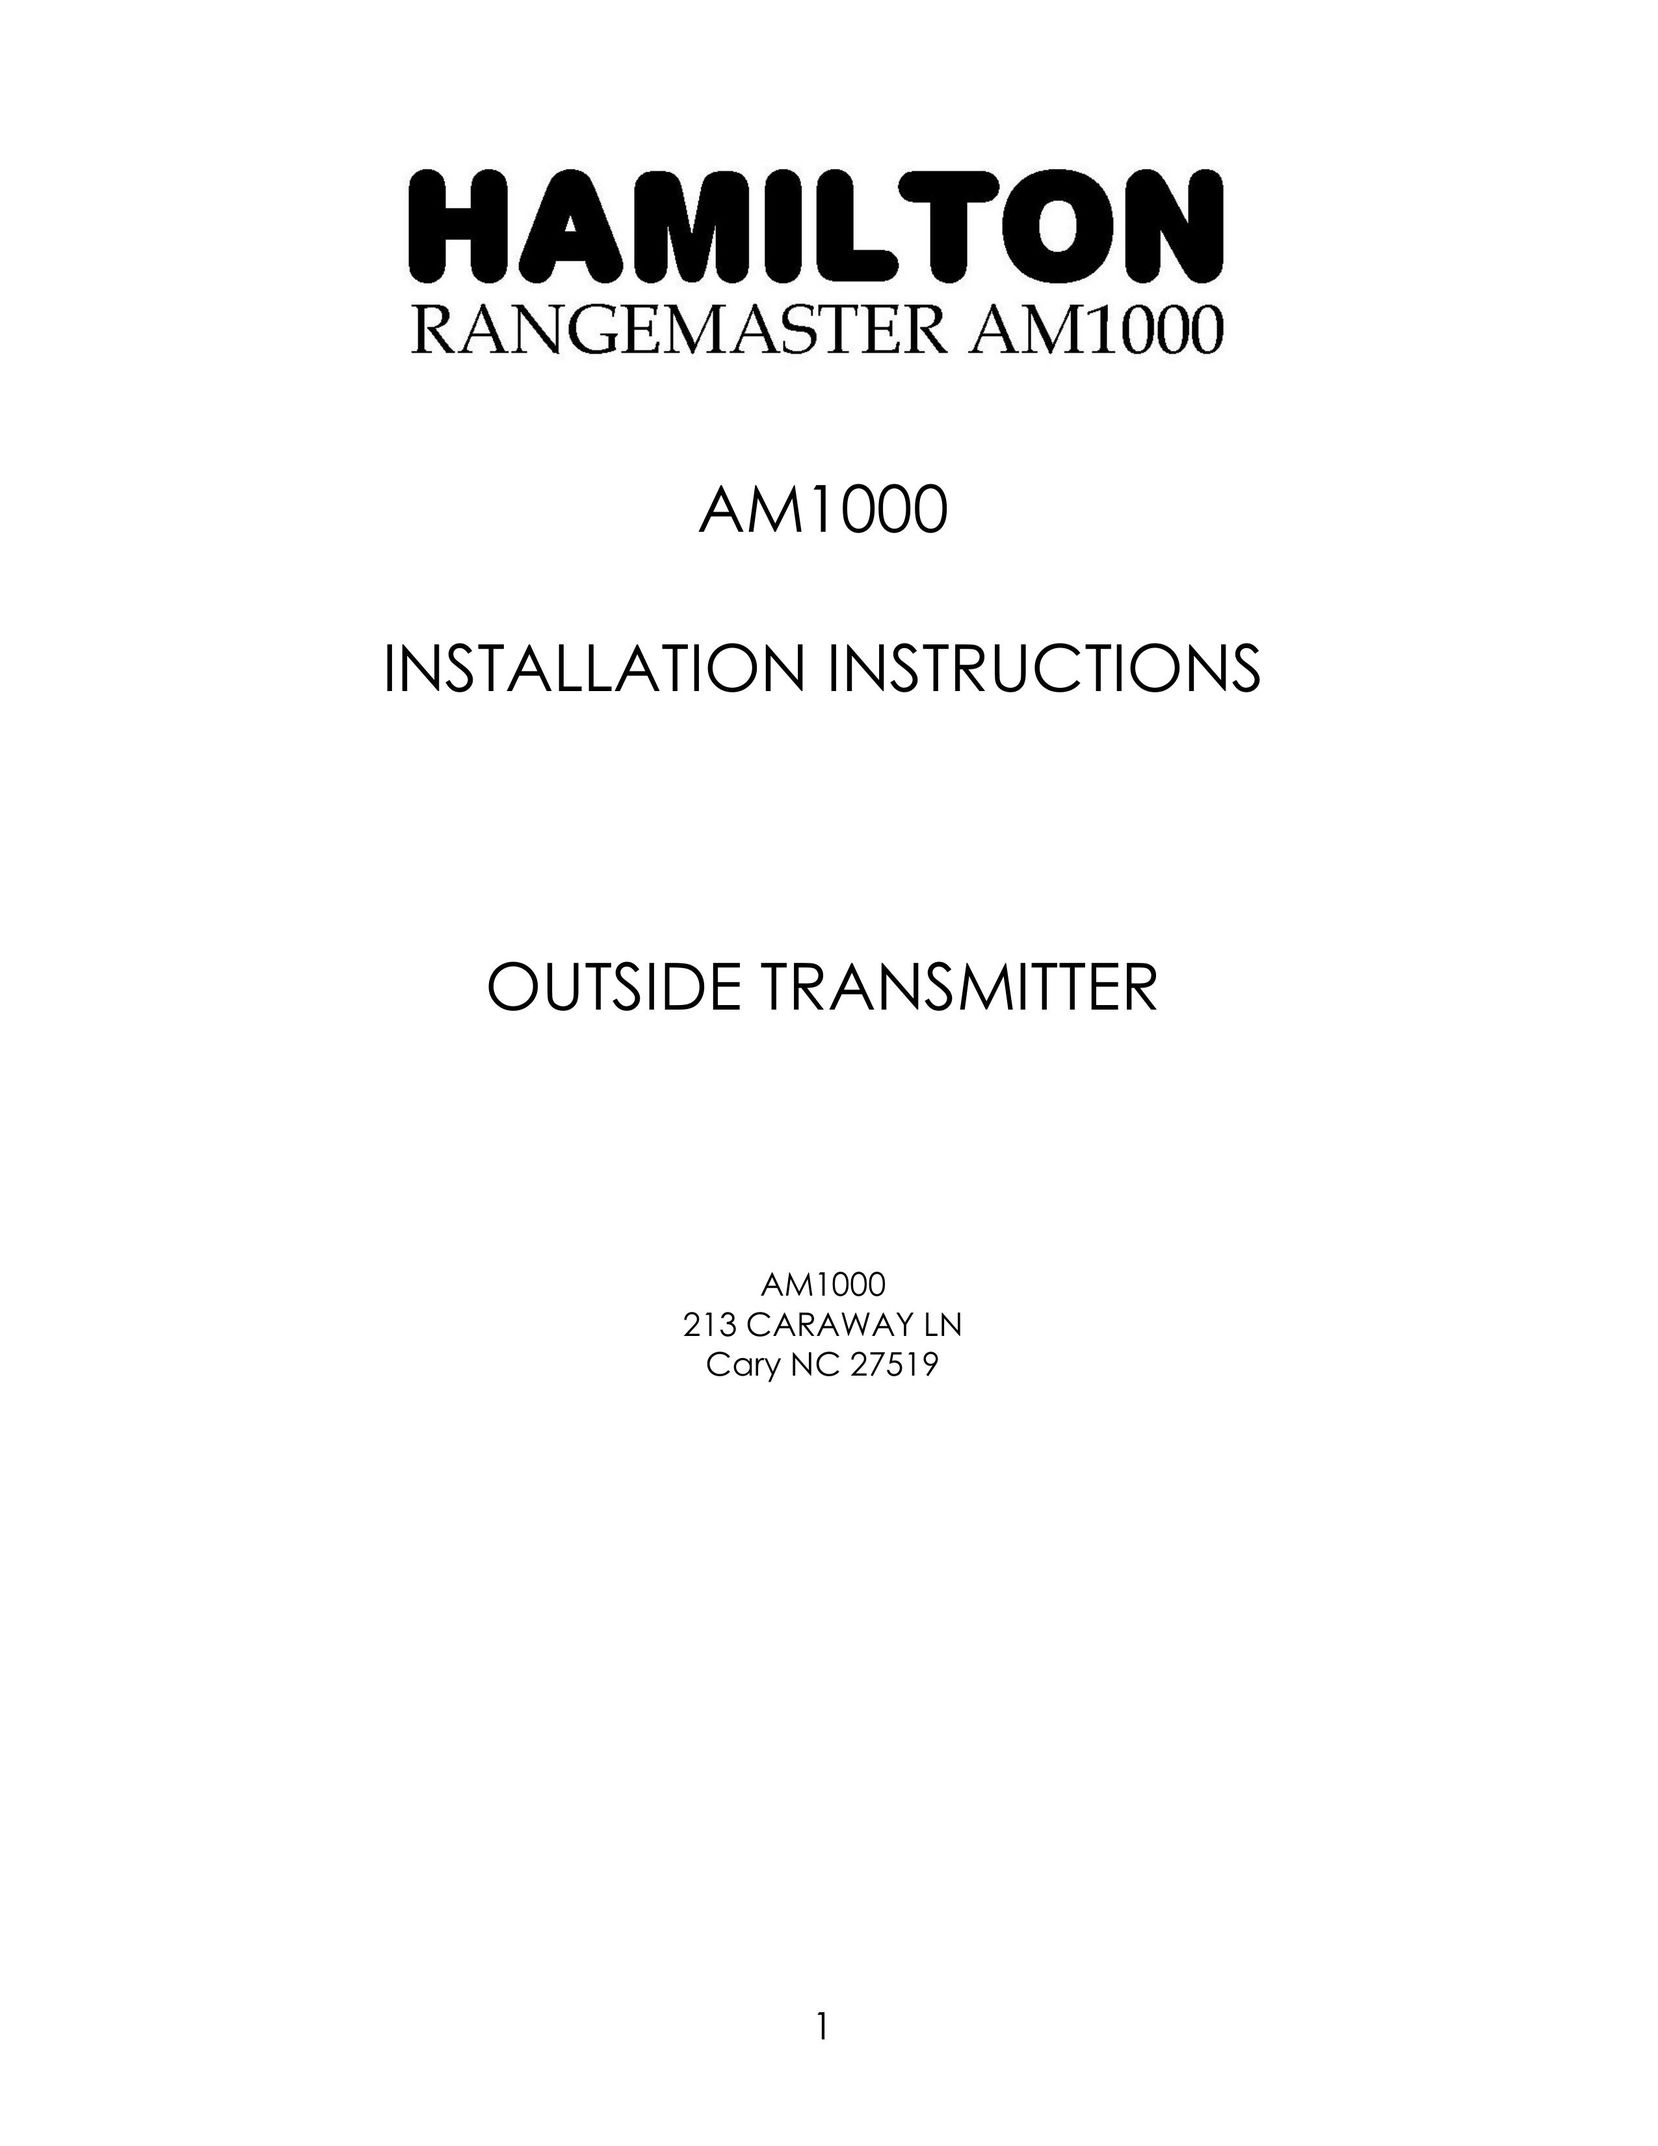 Hamilton Electronics AM1000 Satellite Radio User Manual